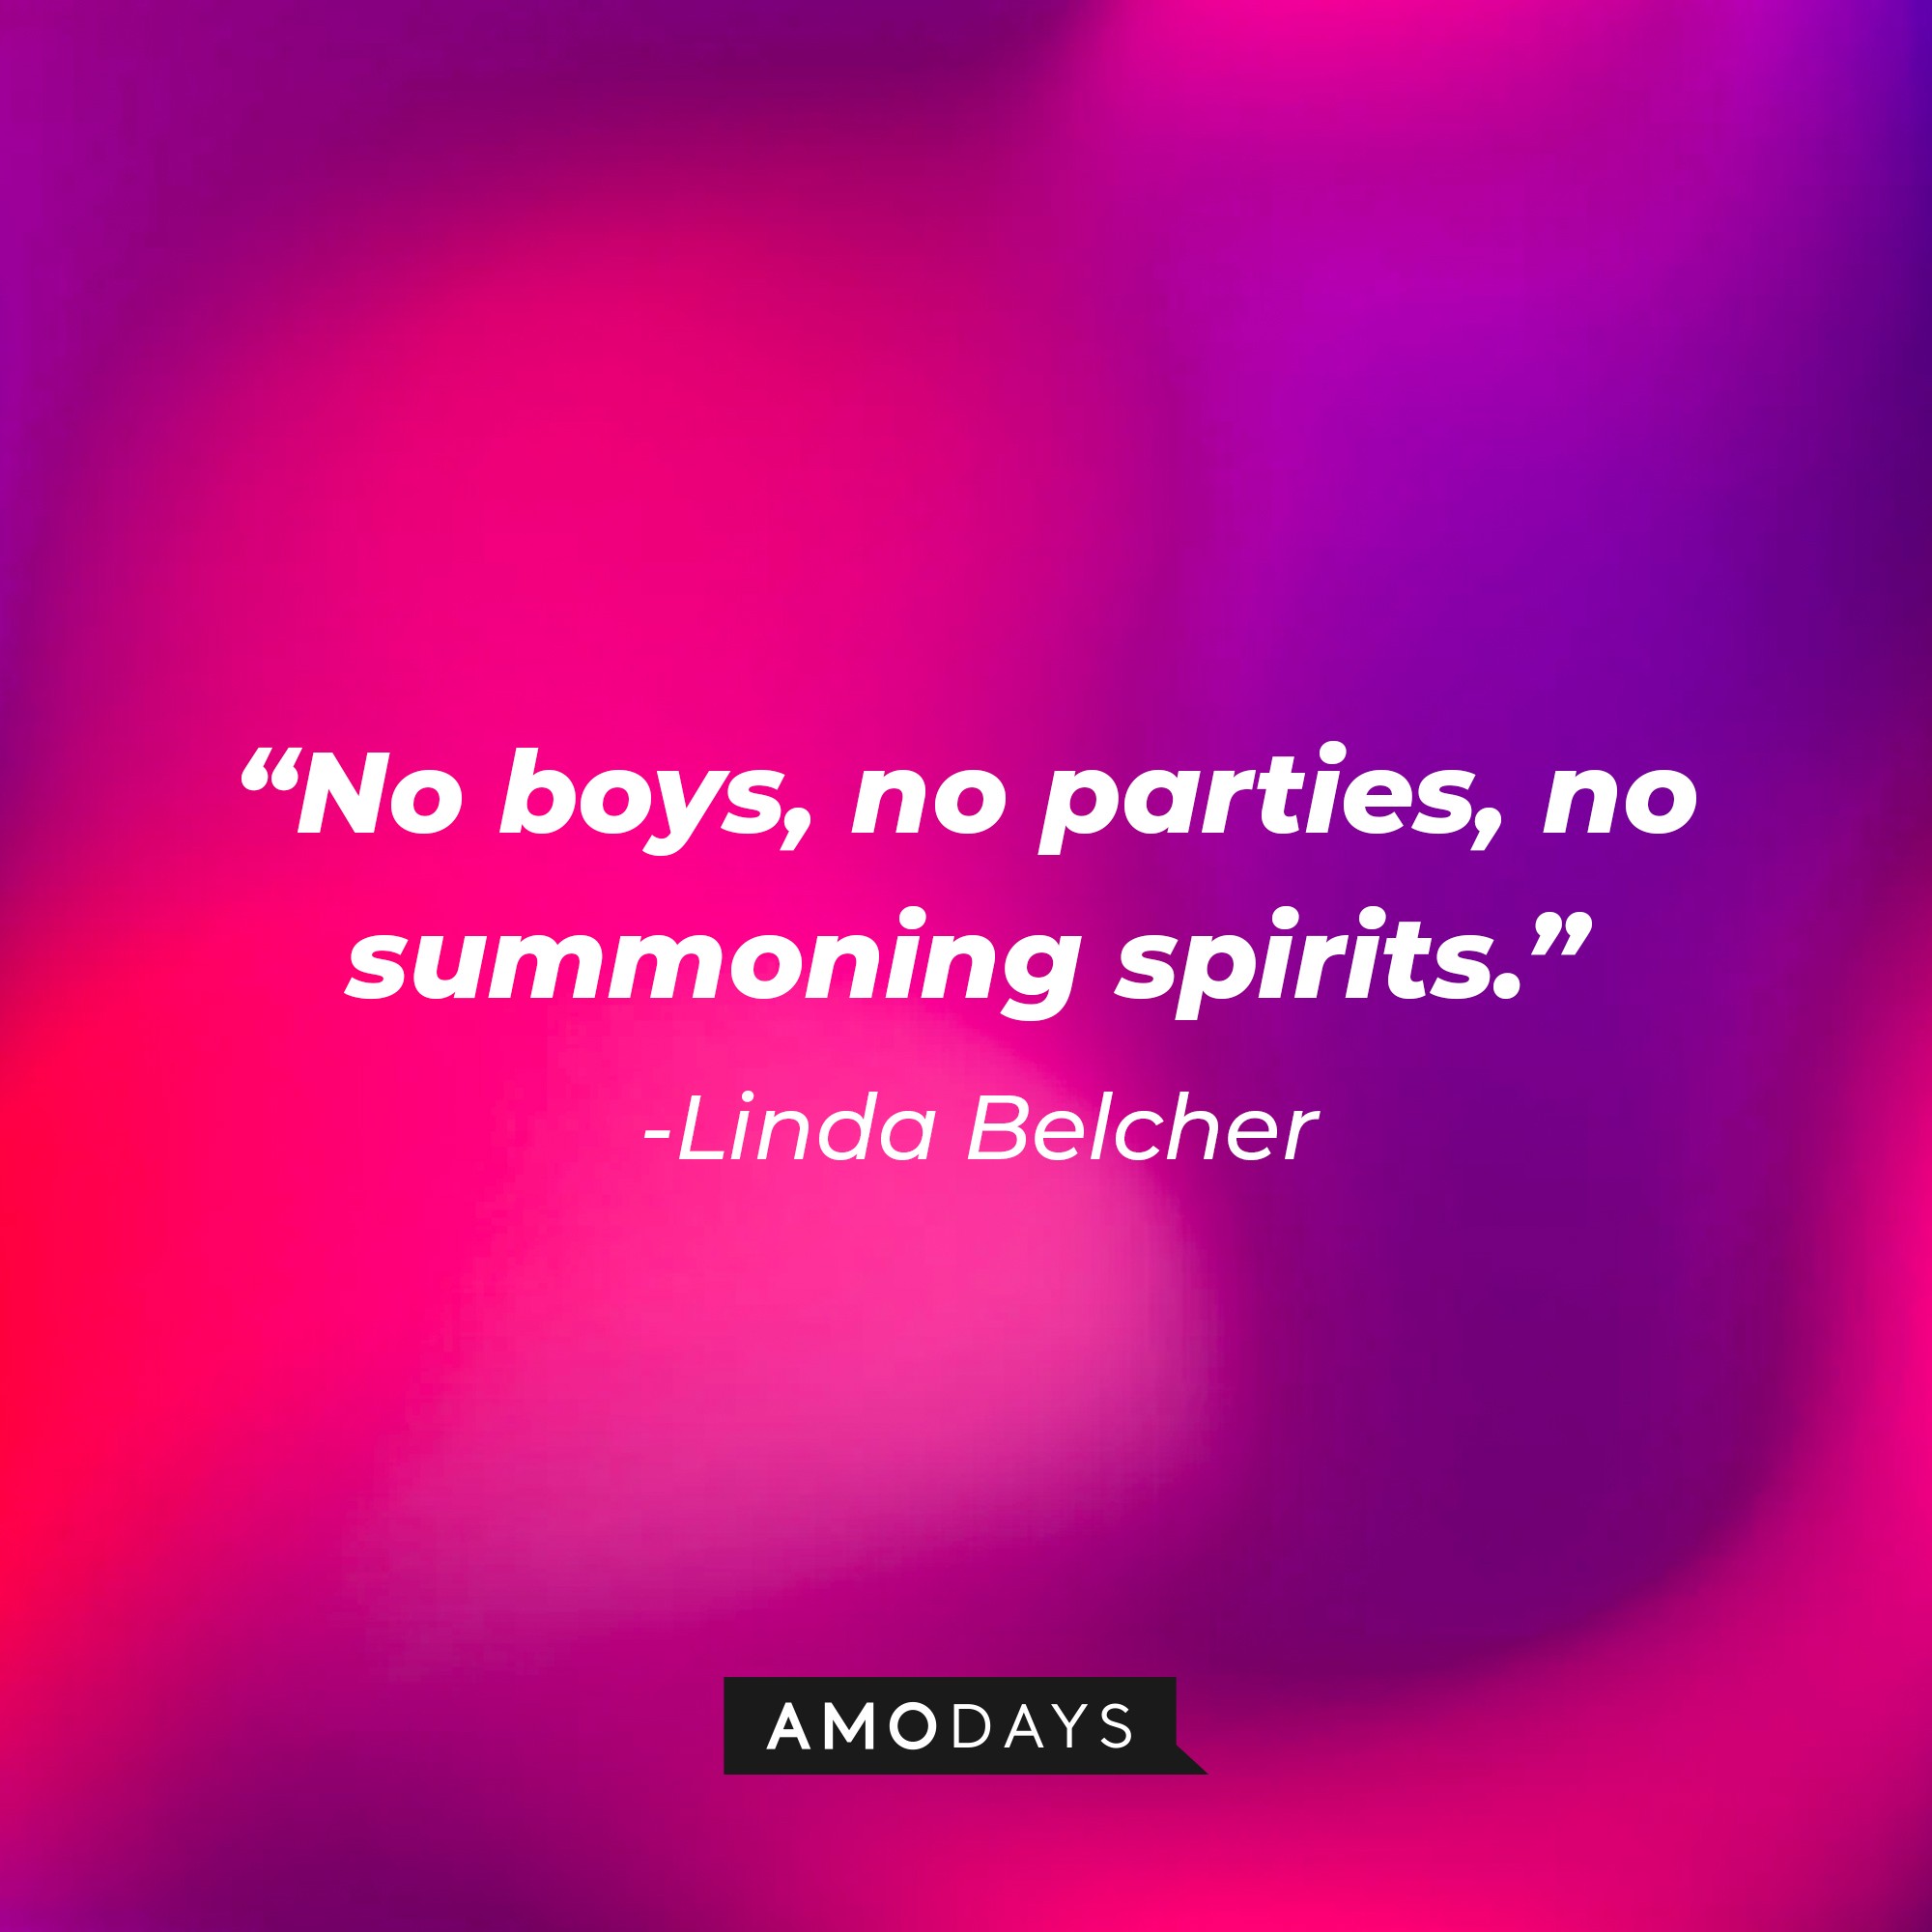 Linda Belcher’s quote: “No boys, no parties, no summoning spirits.”  | Source: AmoDays